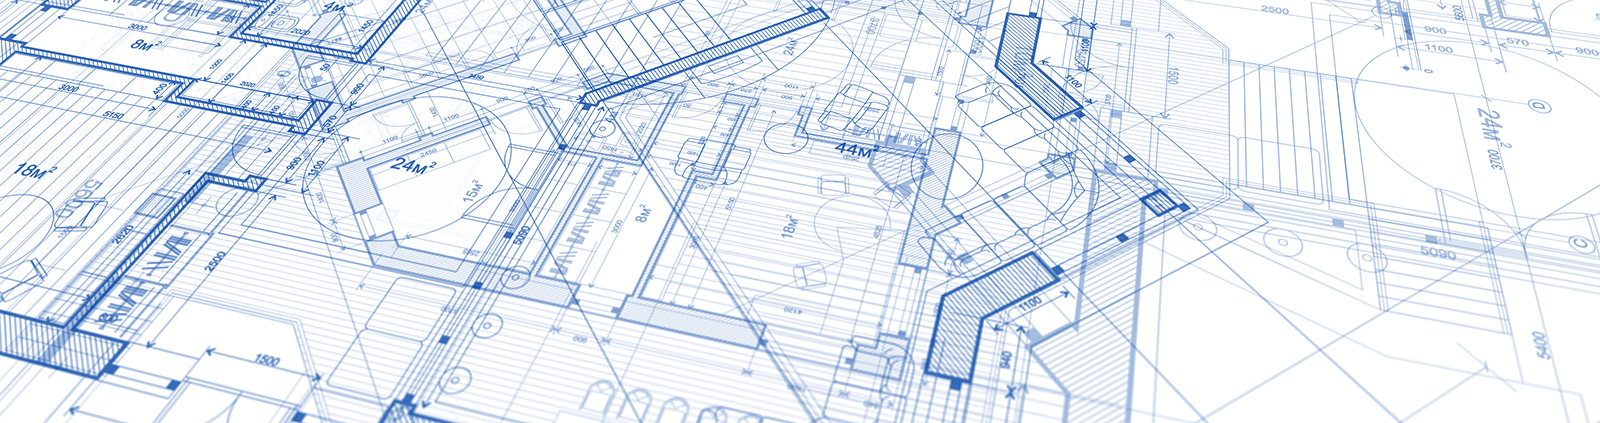 A blueprint of a large facility